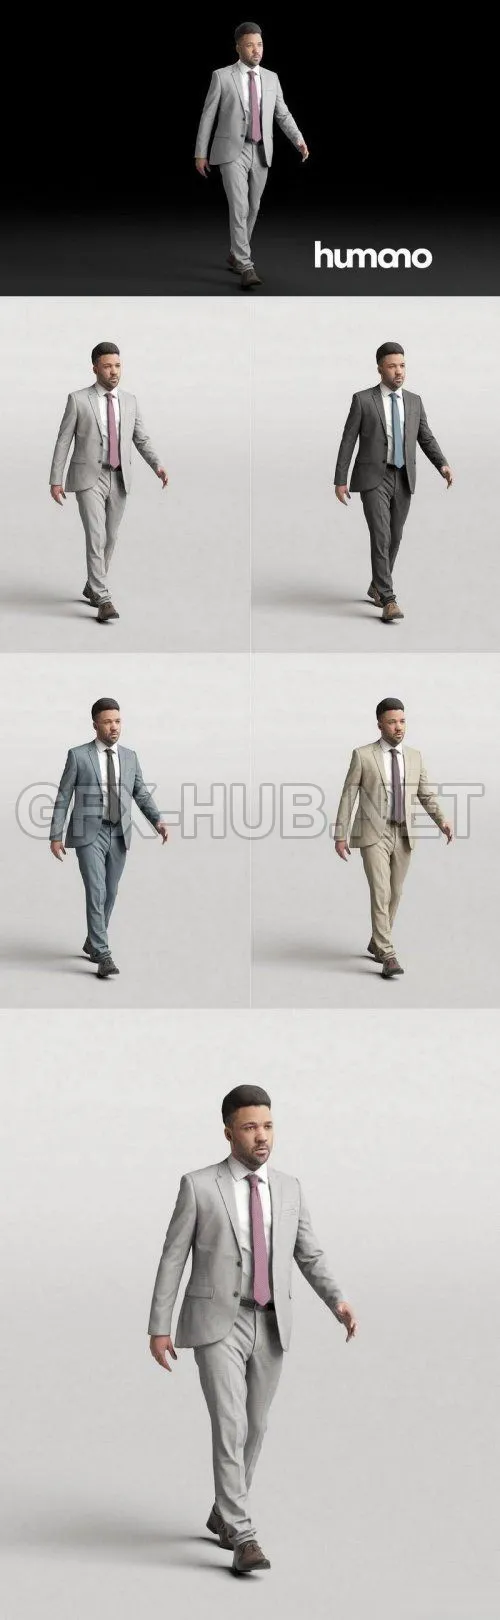 PBR Game 3D Model – Humano Elegant Man Walking and talking 0302